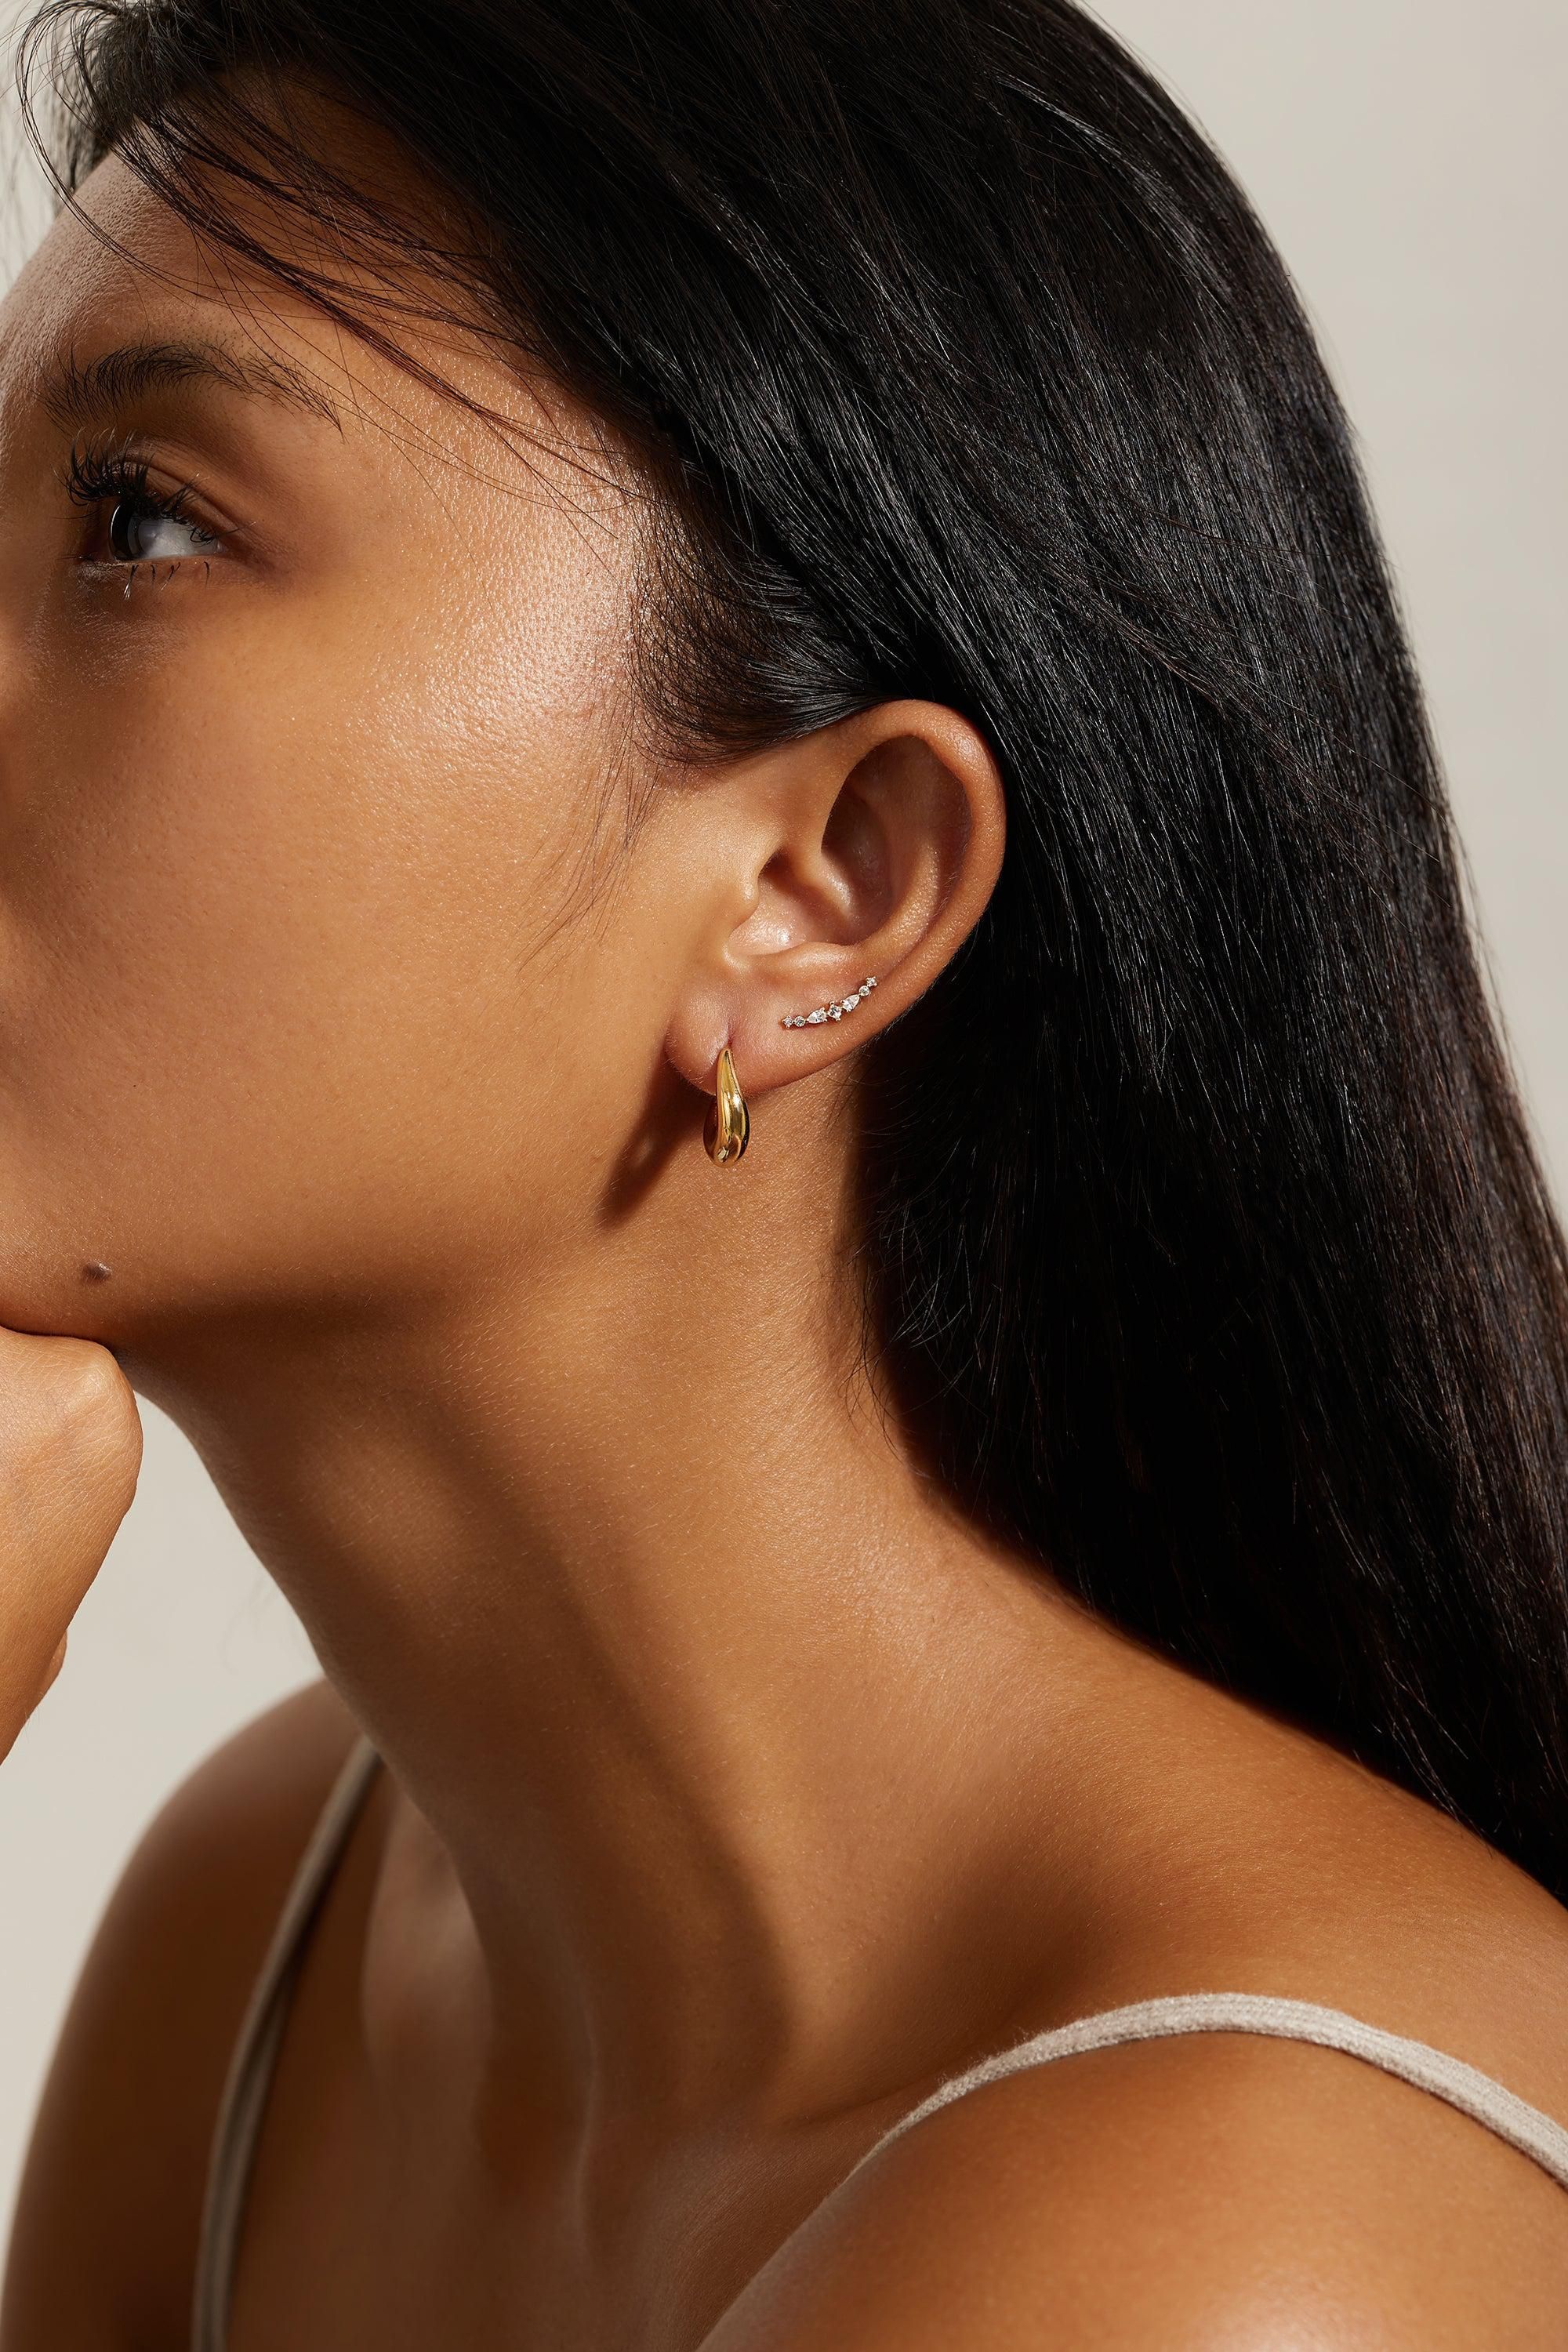 a woman is wearing a pair of earrings